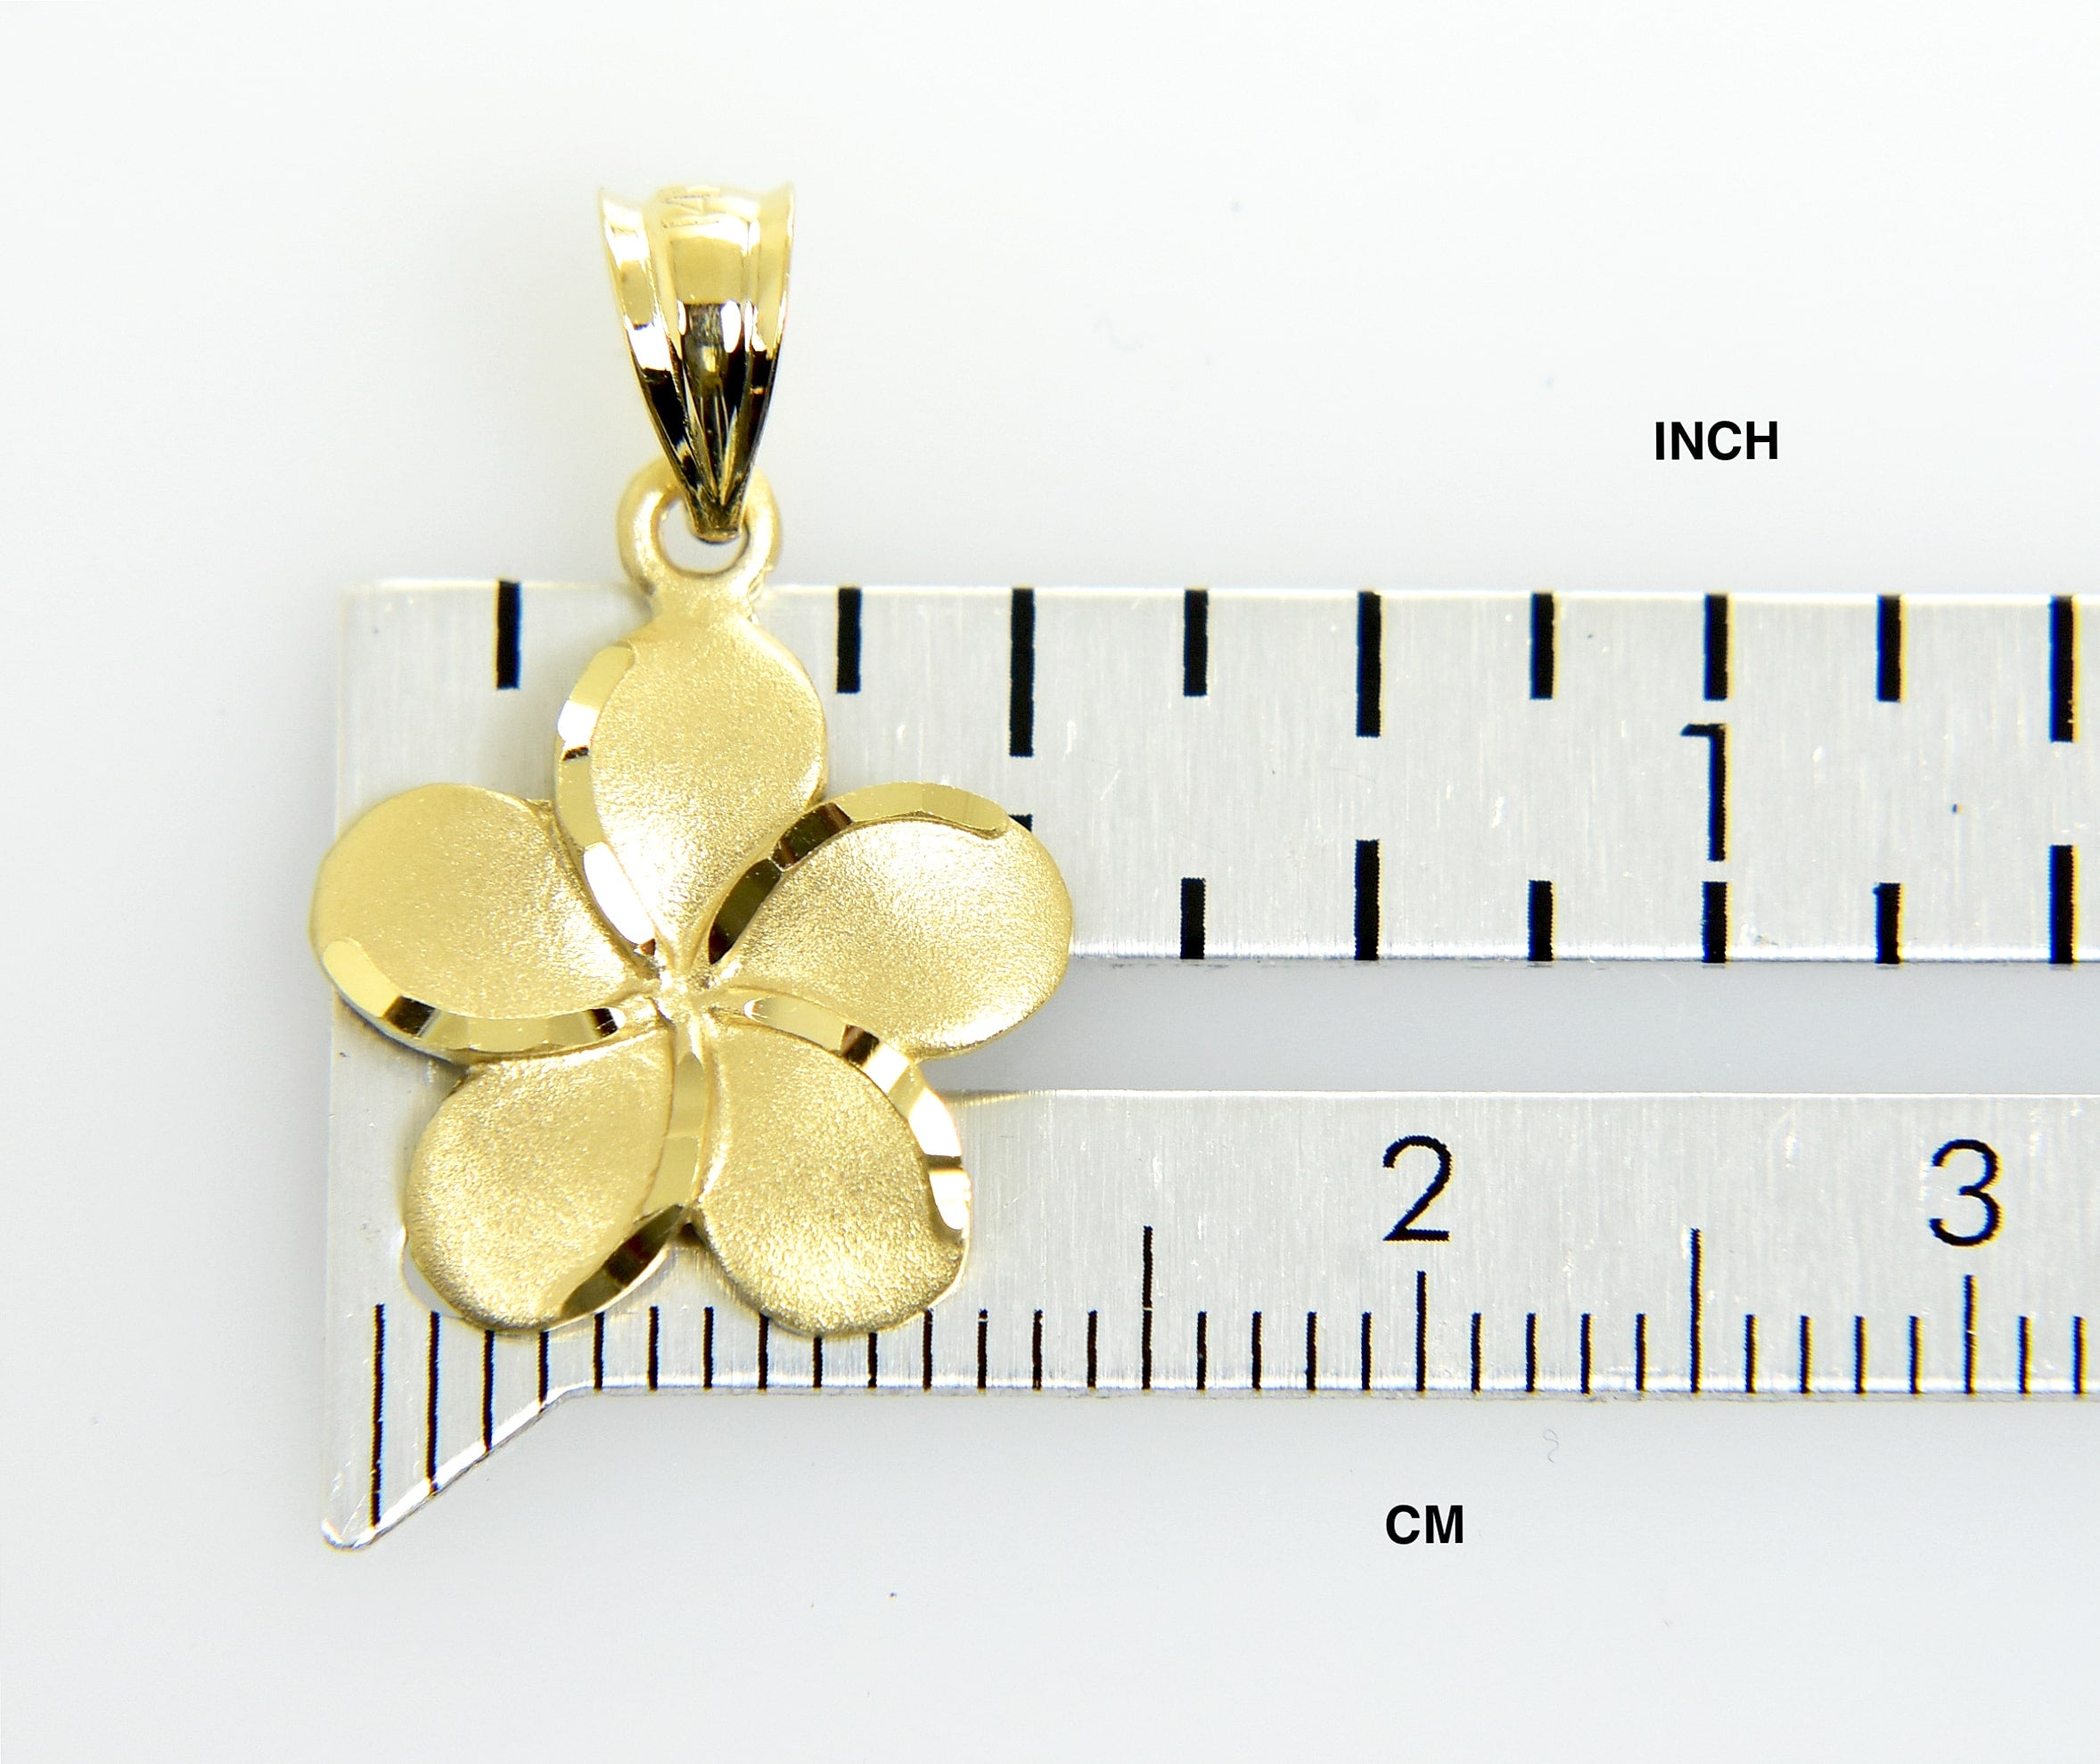 14k Yellow Gold Plumeria Flower Small Pendant Charm